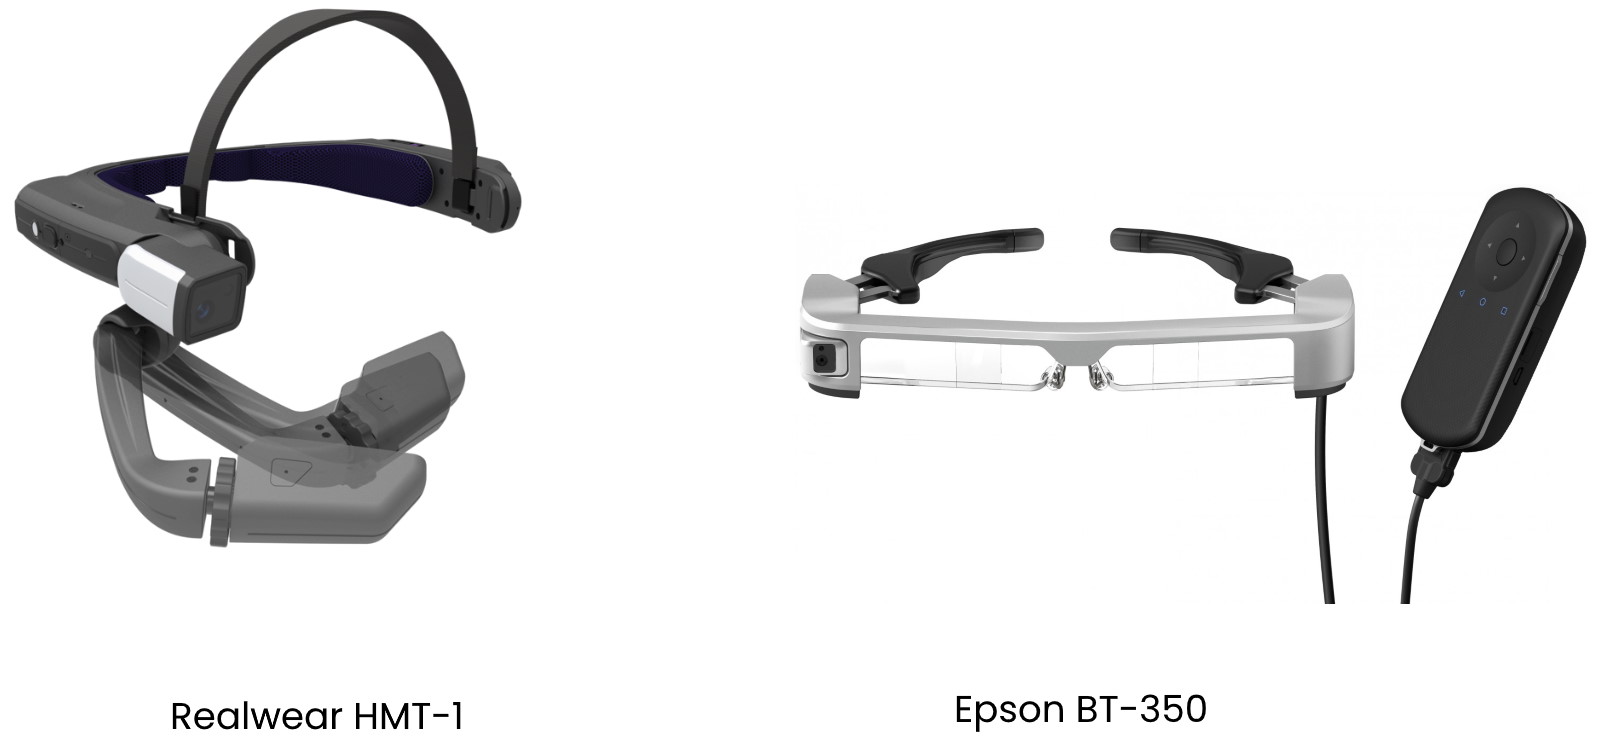 Realwear HMT-1 and Epson BT-350